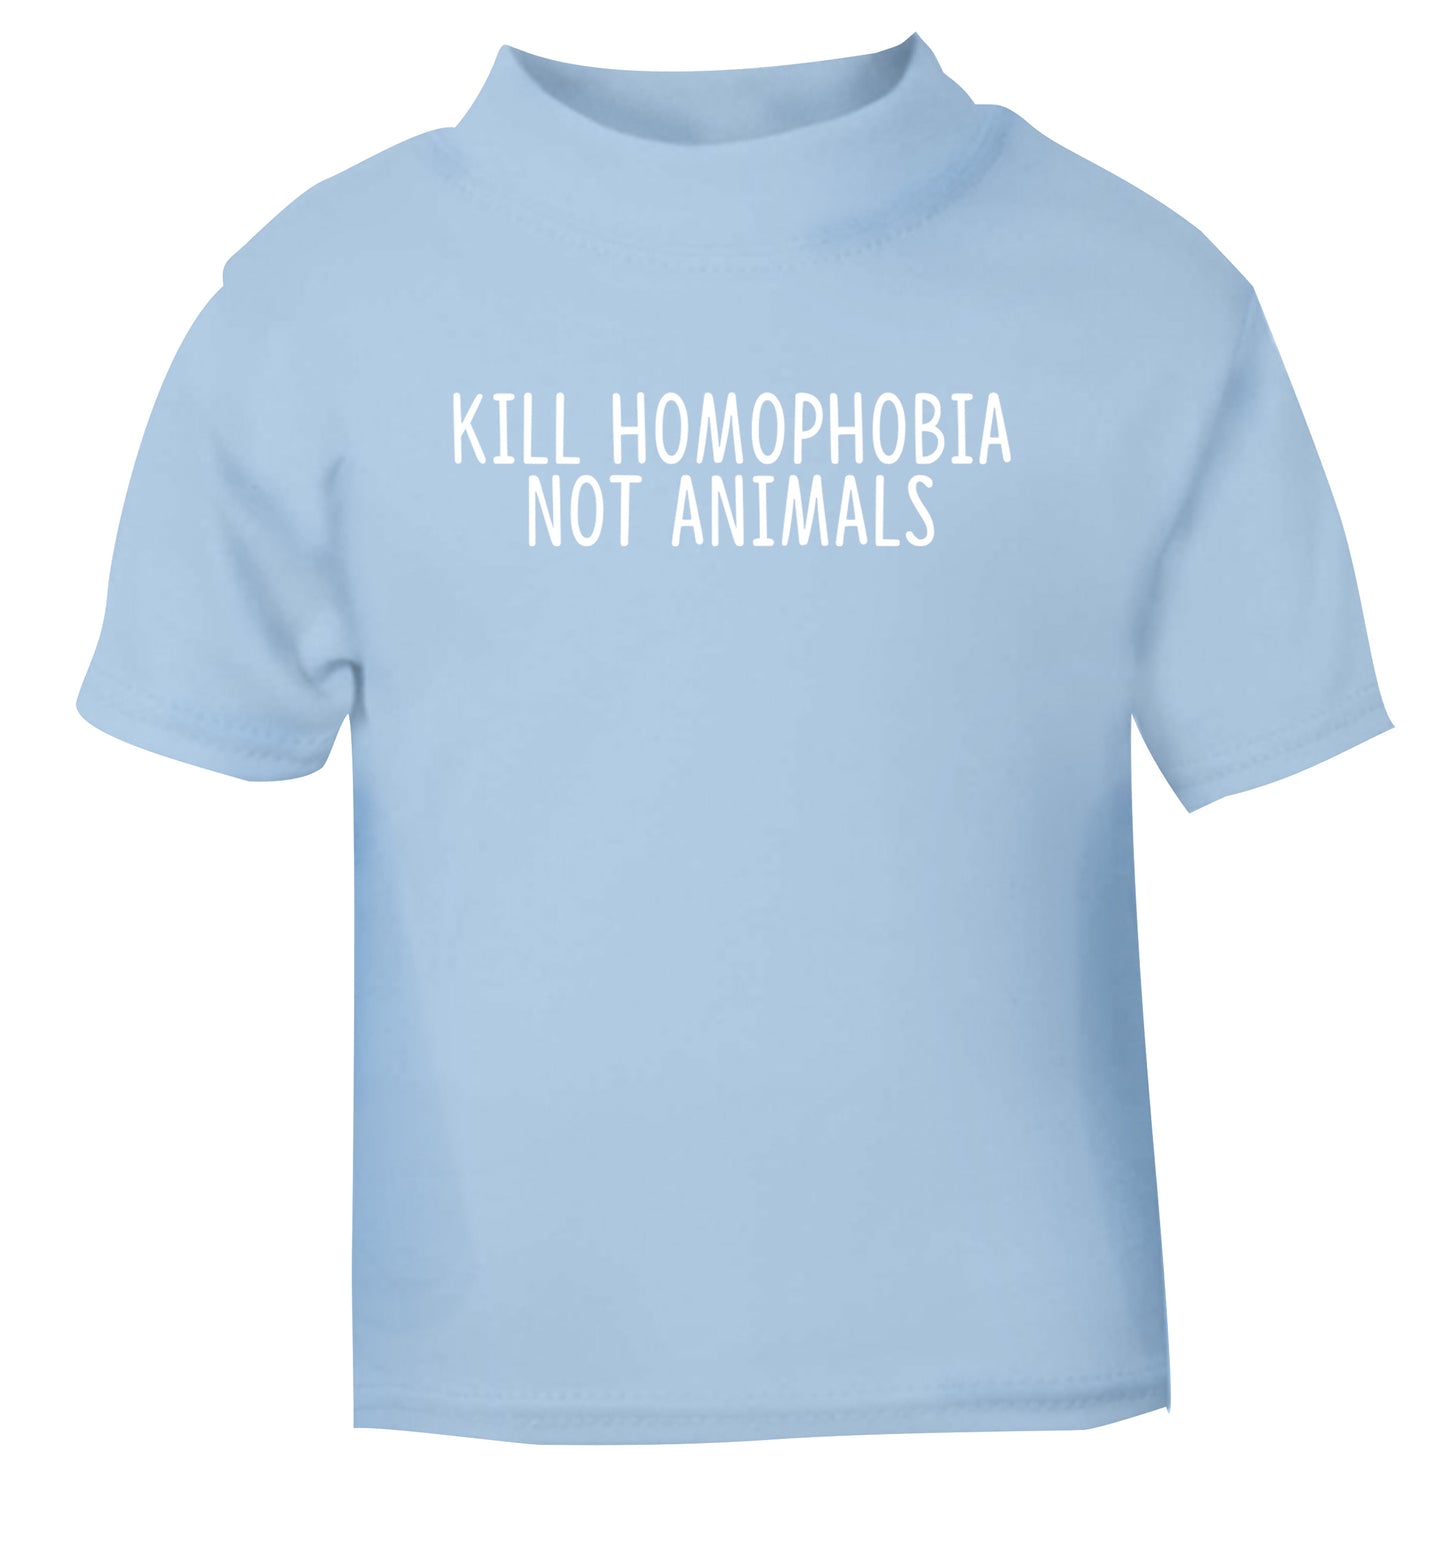 Kill Homophobia Not Animals light blue Baby Toddler Tshirt 2 Years